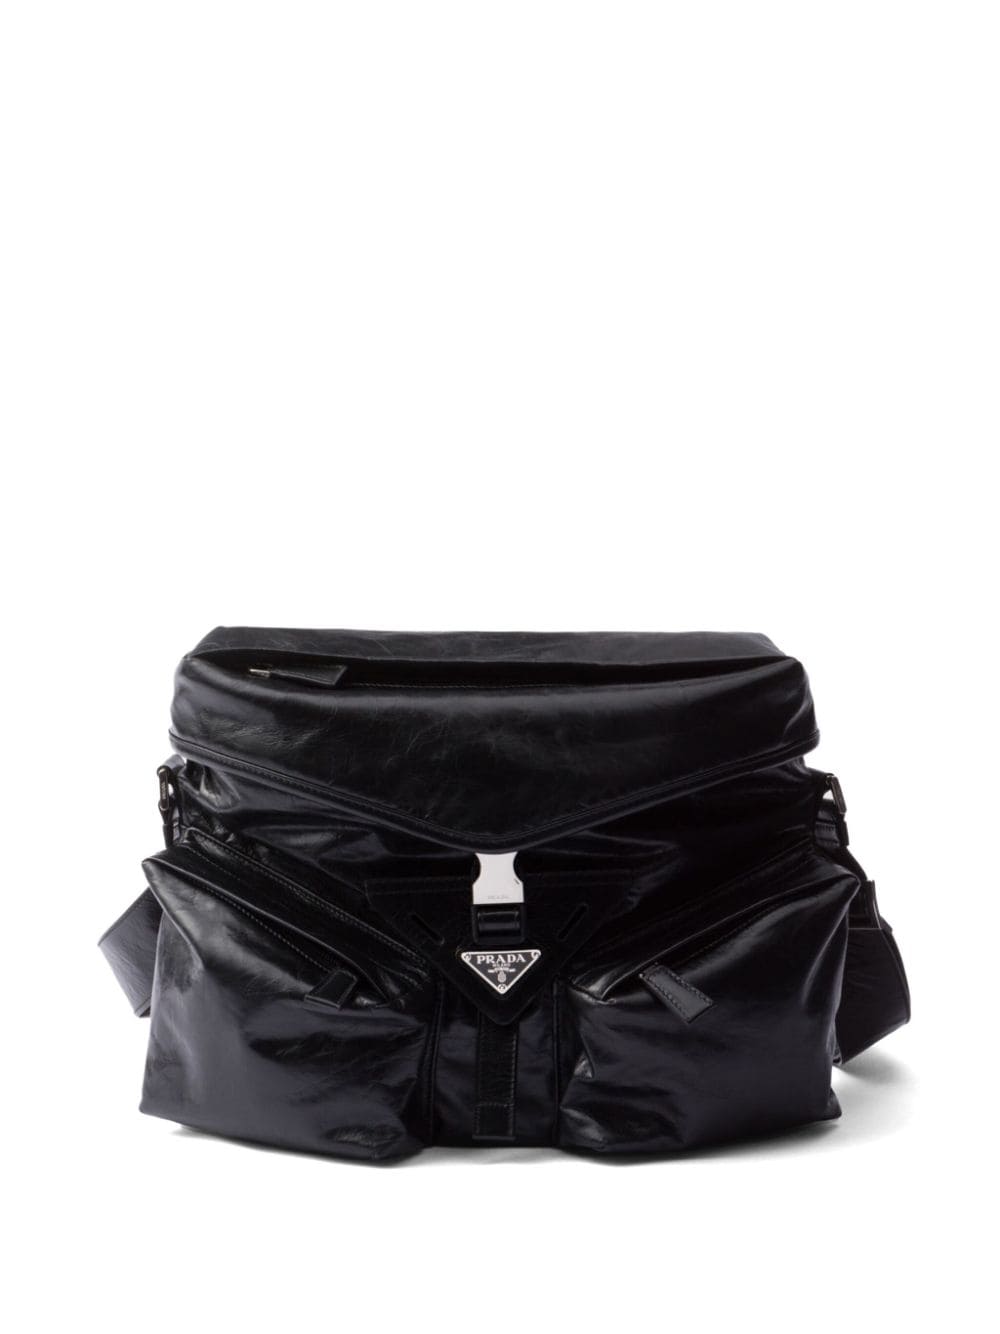 Prada leather shoulder bag - Black von Prada